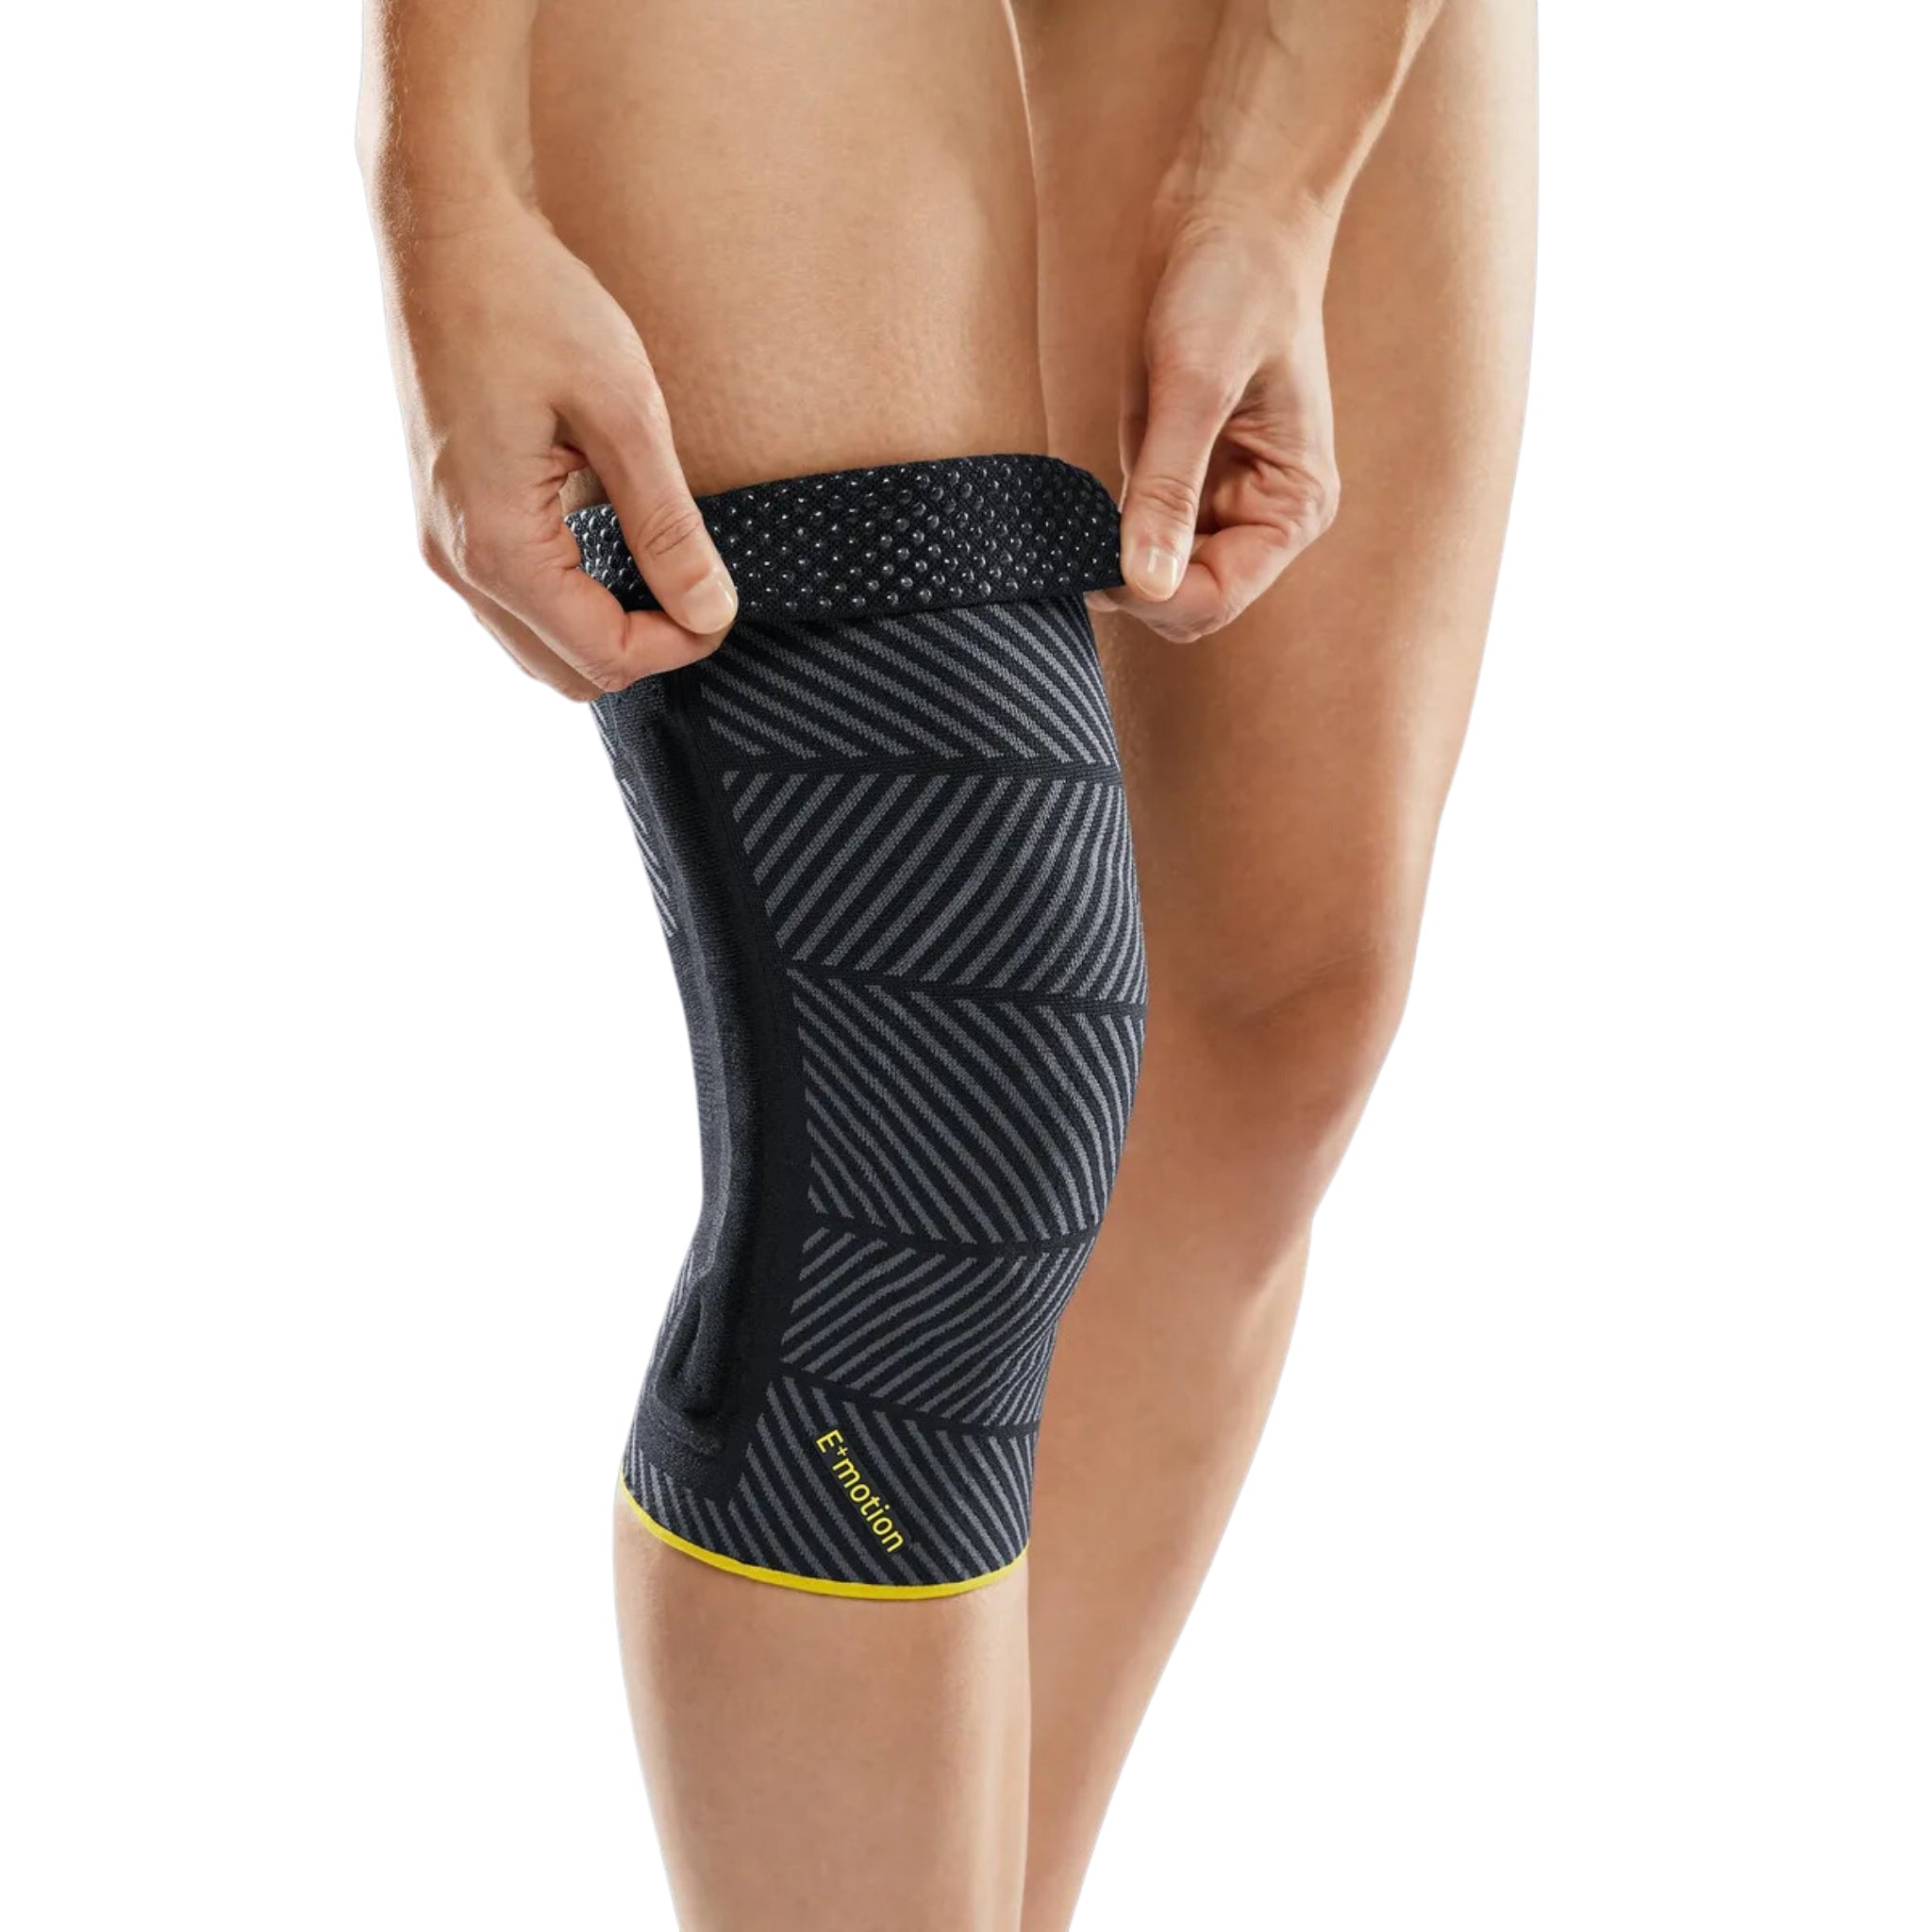 Ovation, Under Sleeve for Game Changer OA Knee Brace Medics Mobility